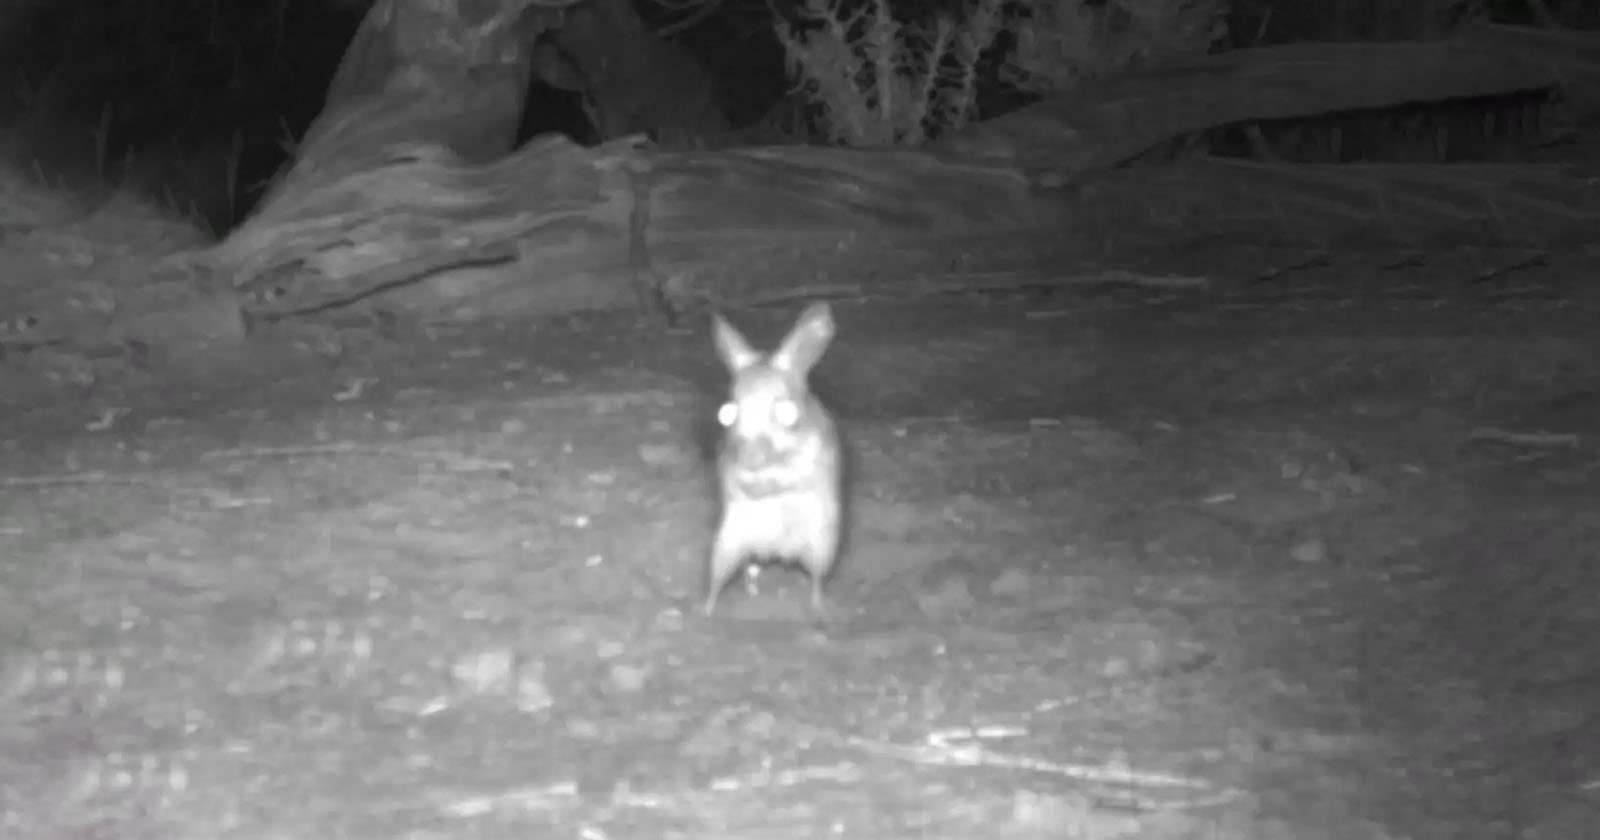  trail cameras capture bizarre mouse believed locally extinct 